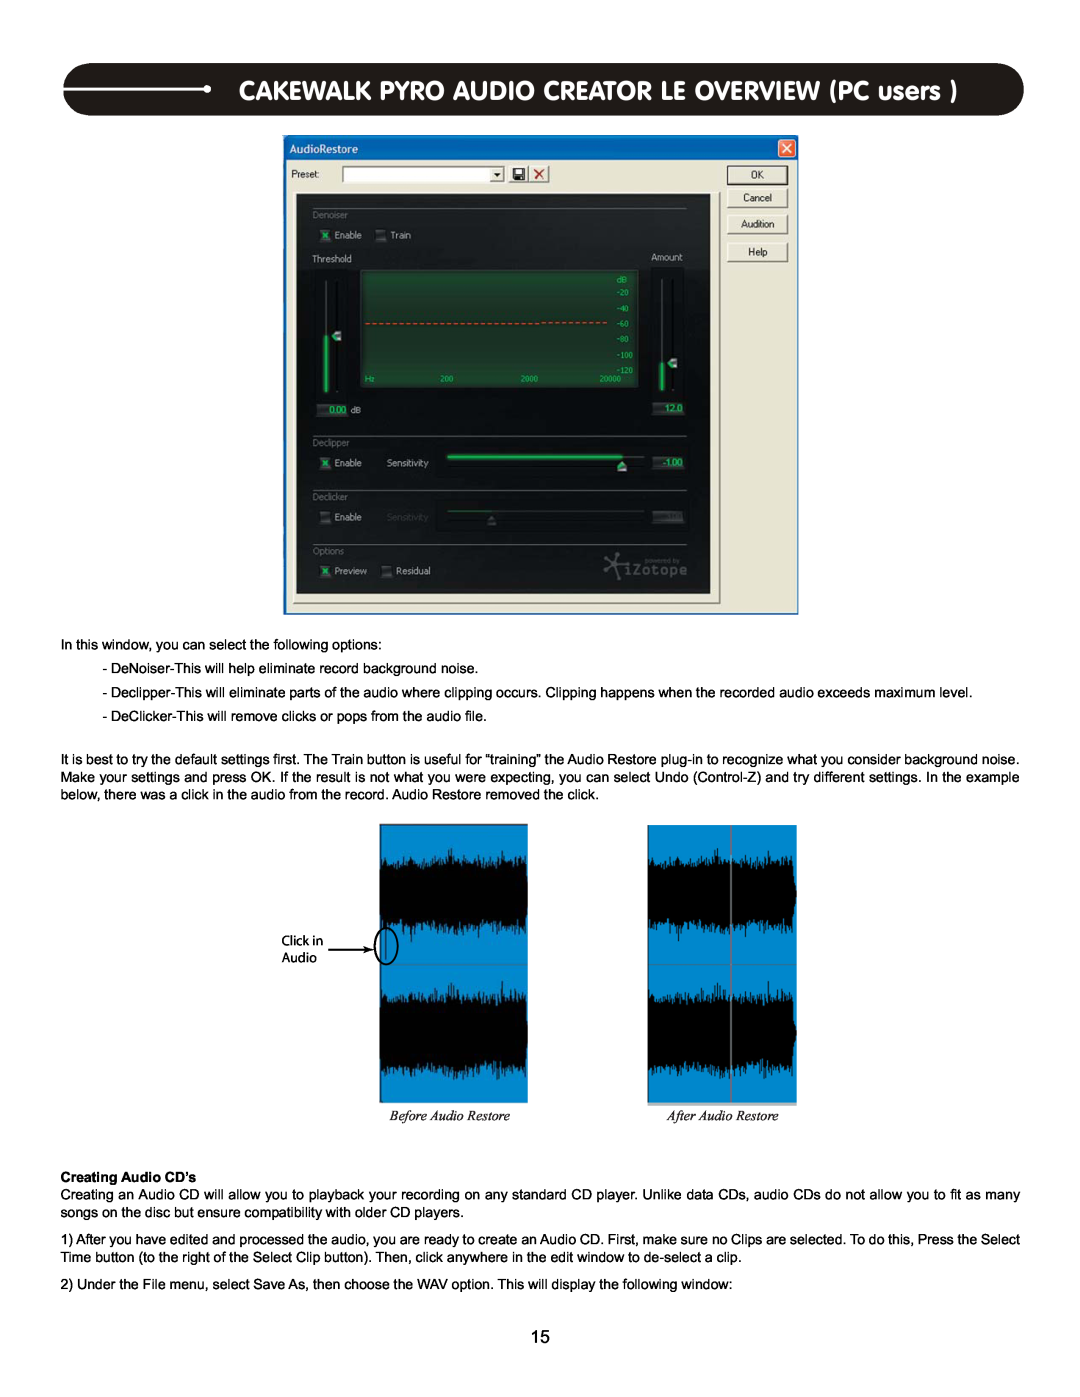 Stanton T.62 user manual CAKEWALK PYRO AUDIO CREATOR LE OVERVIEW PC users, HIRUH$XGLR5HVWRUH, Creating Audio CD’s 